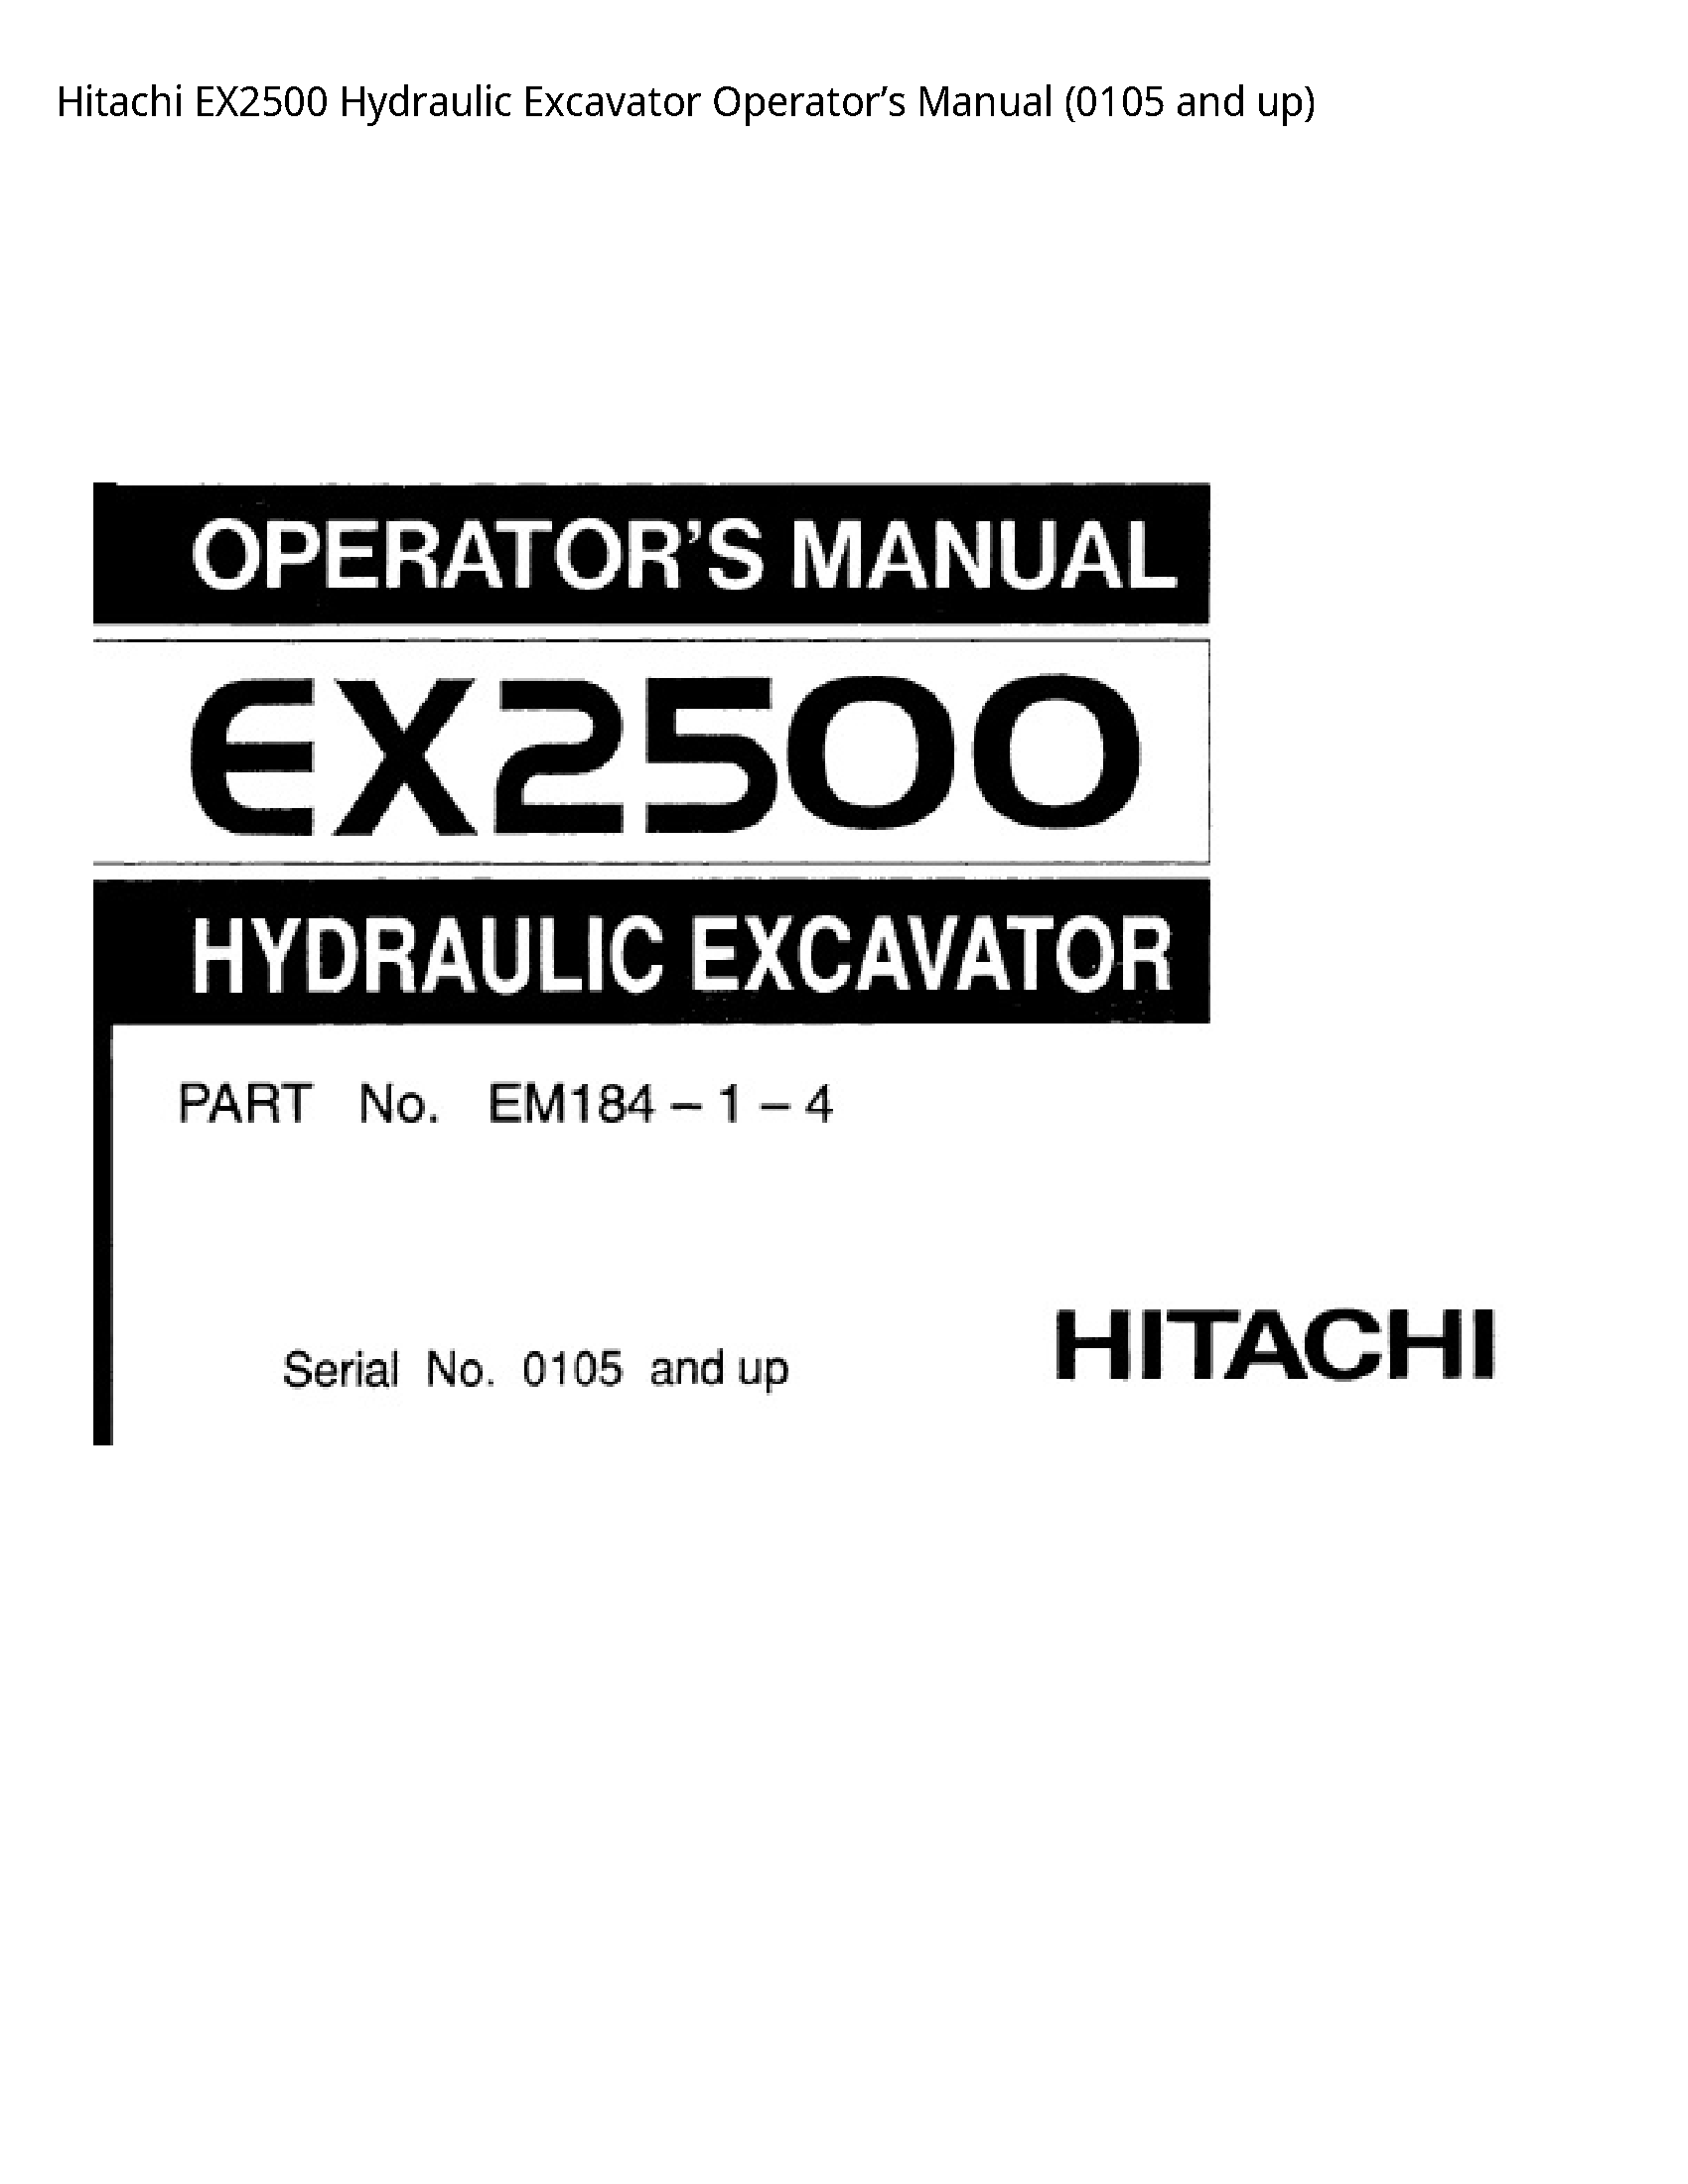 Hitachi EX2500 Hydraulic Excavator Operator’s manual